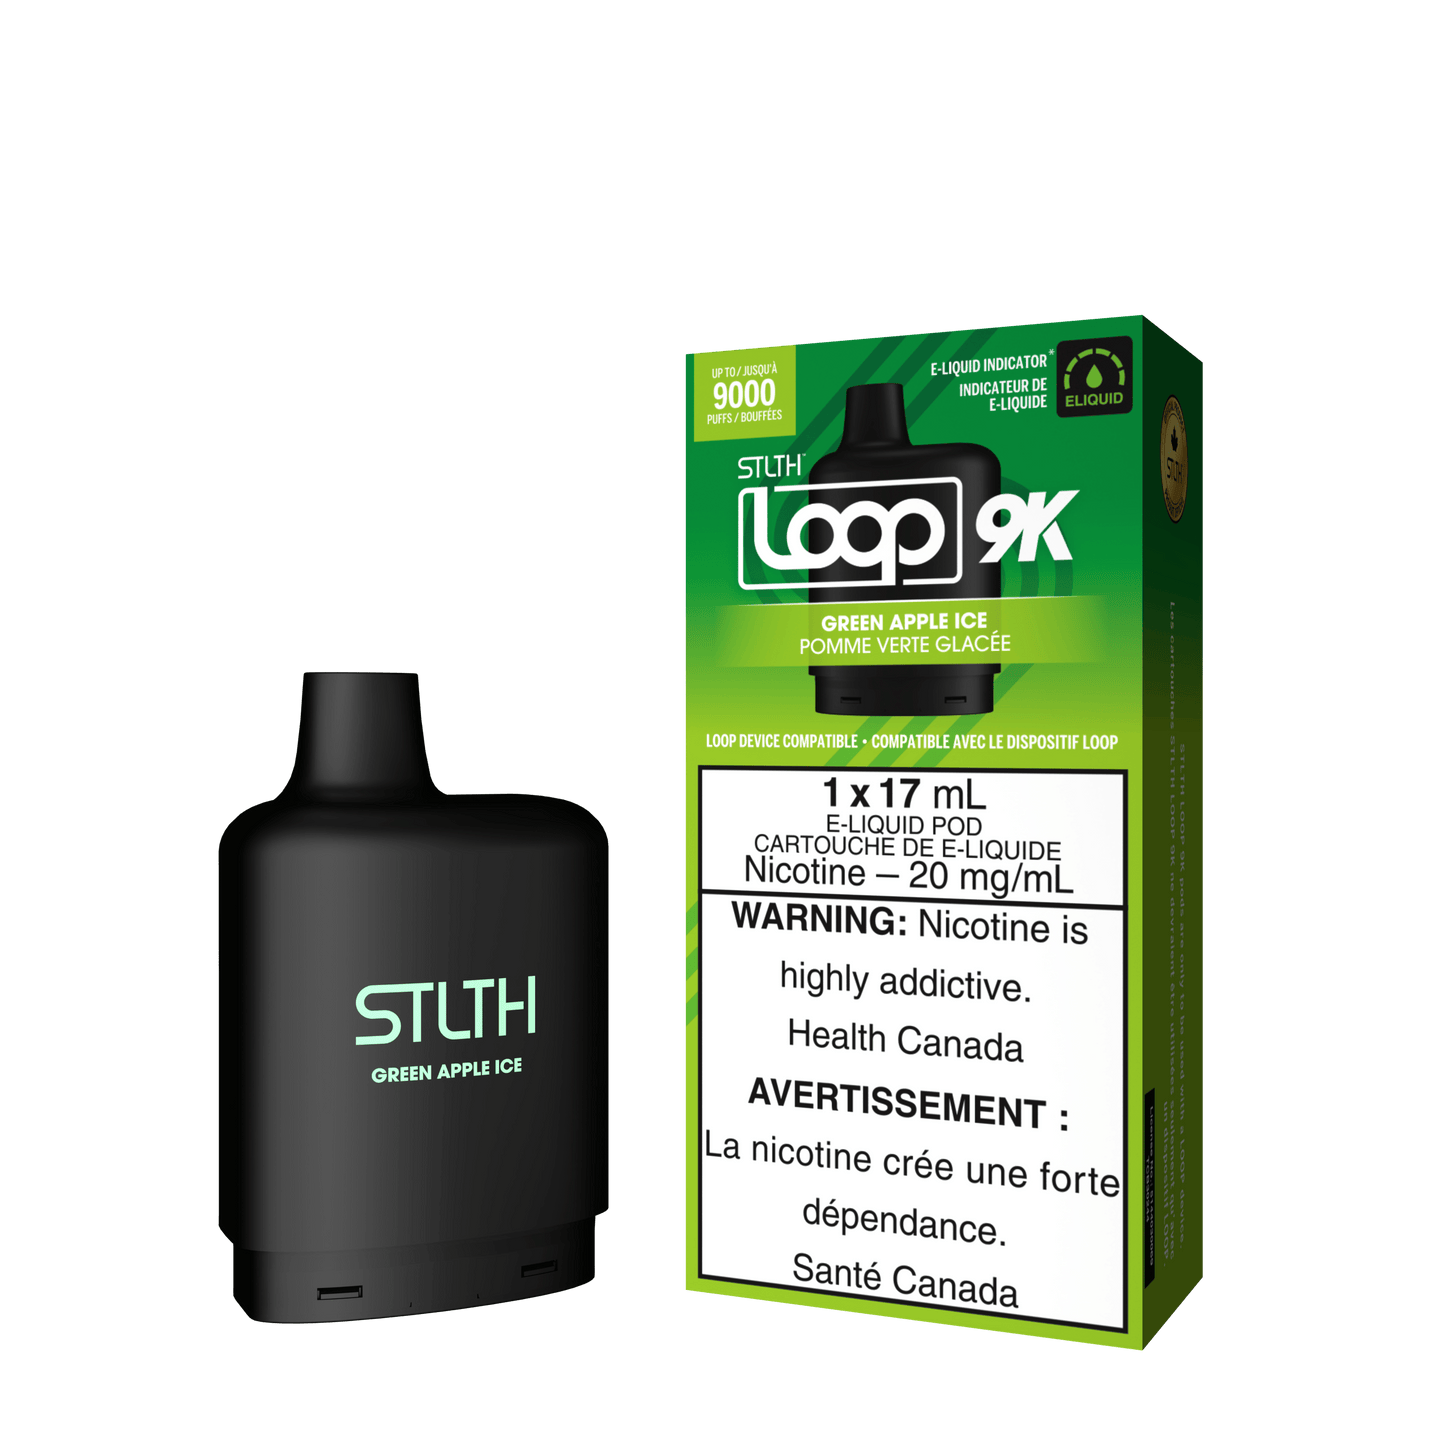 STLTH Loop 9K - Green Apple Ice